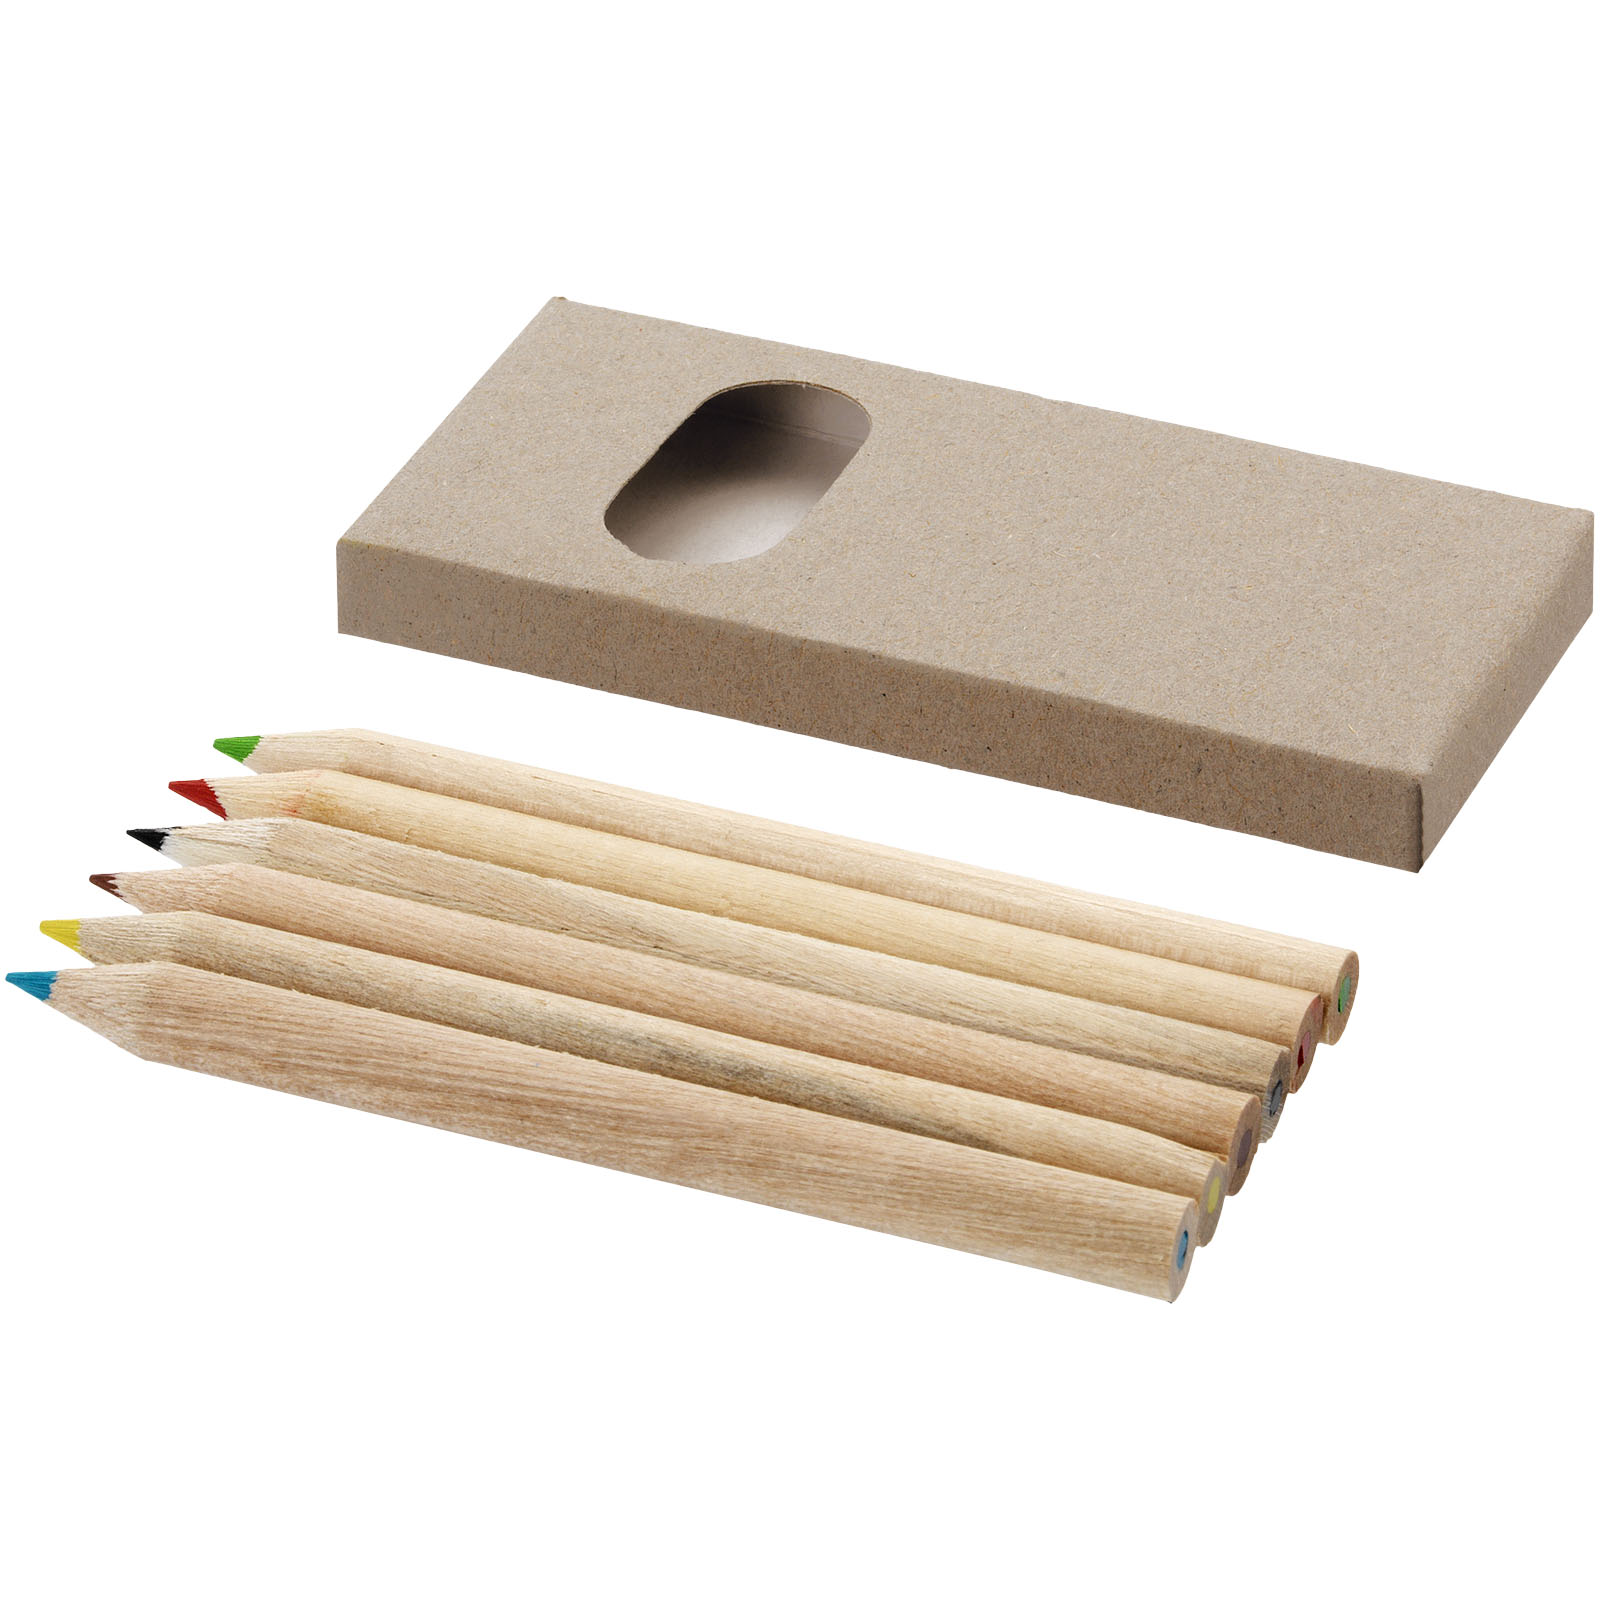 Pens & Writing - Artemaa 6-piece pencil colouring set